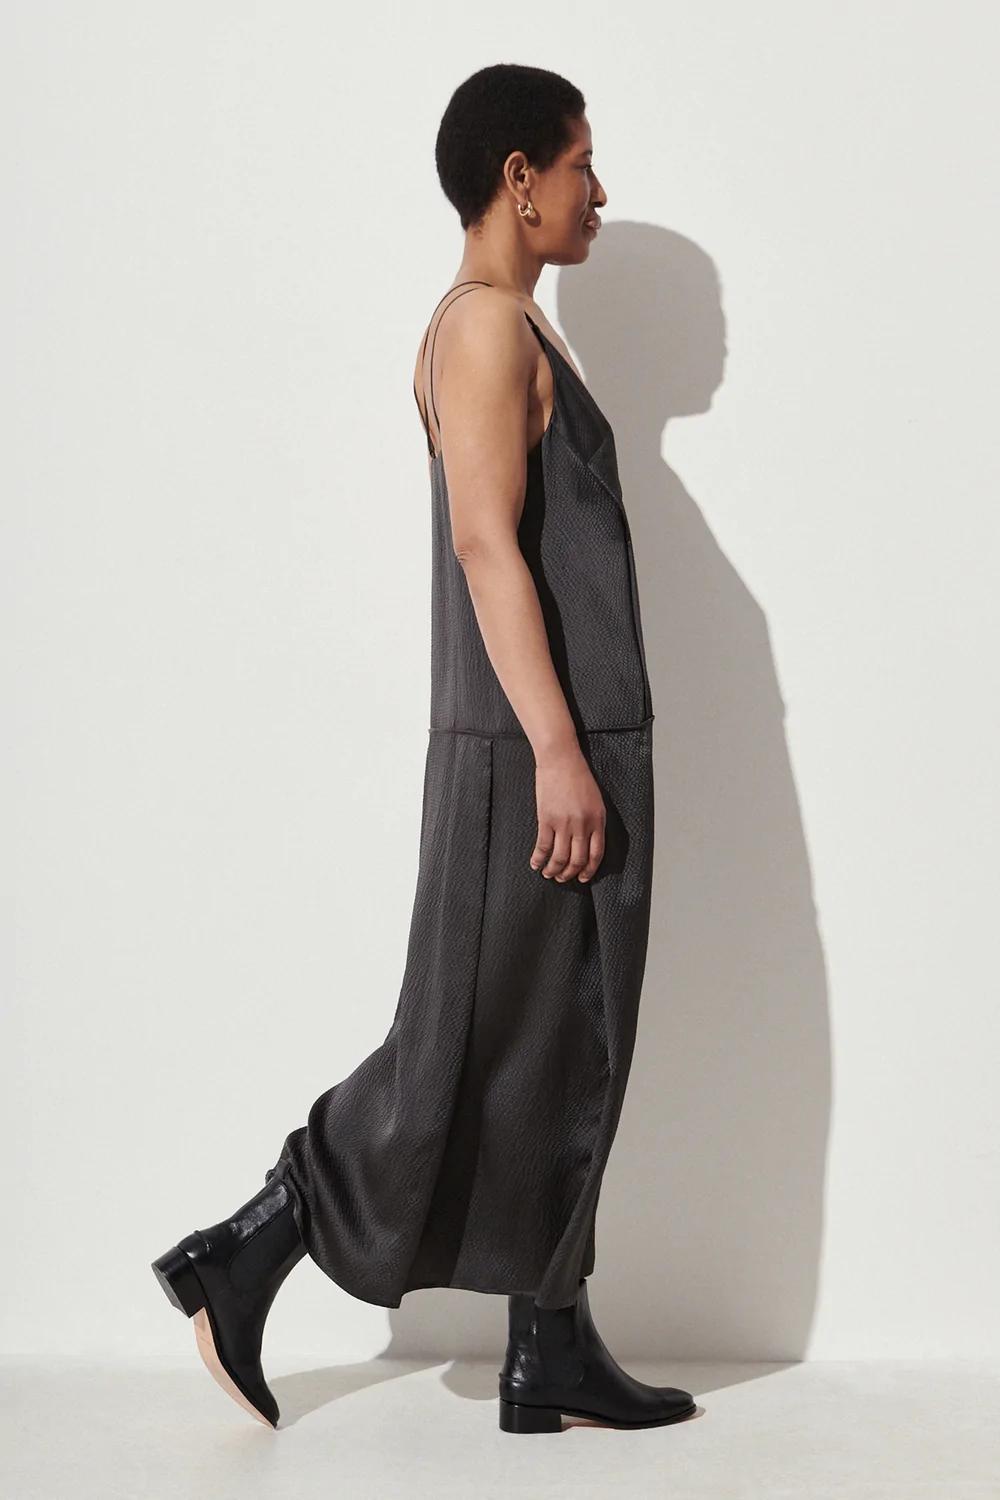 Product Image for Acosta Dress, Dark Grey